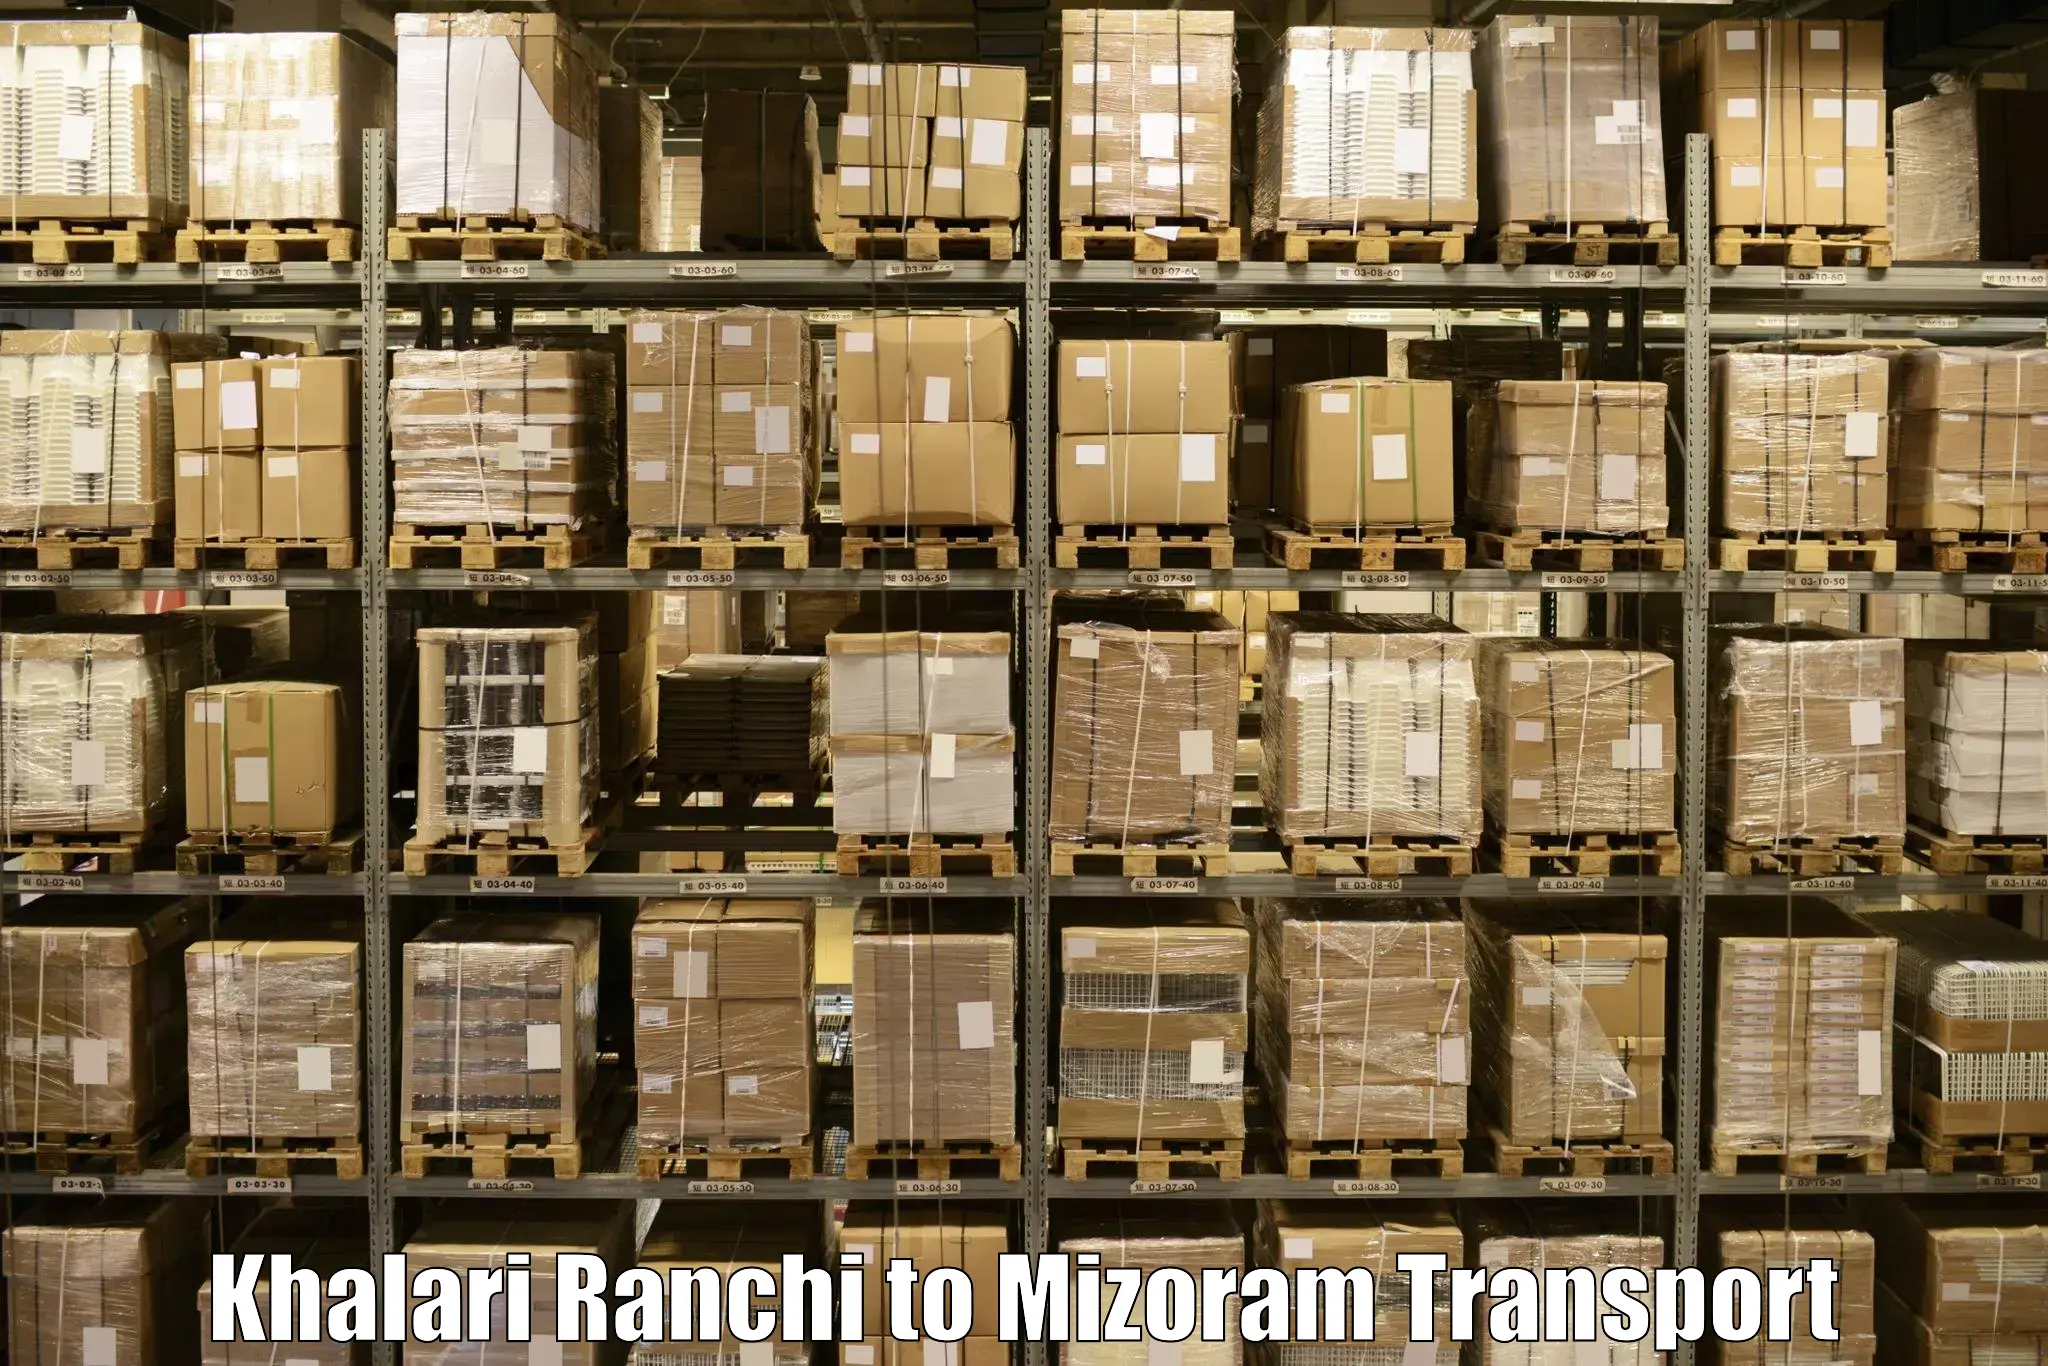 Truck transport companies in India Khalari Ranchi to Siaha